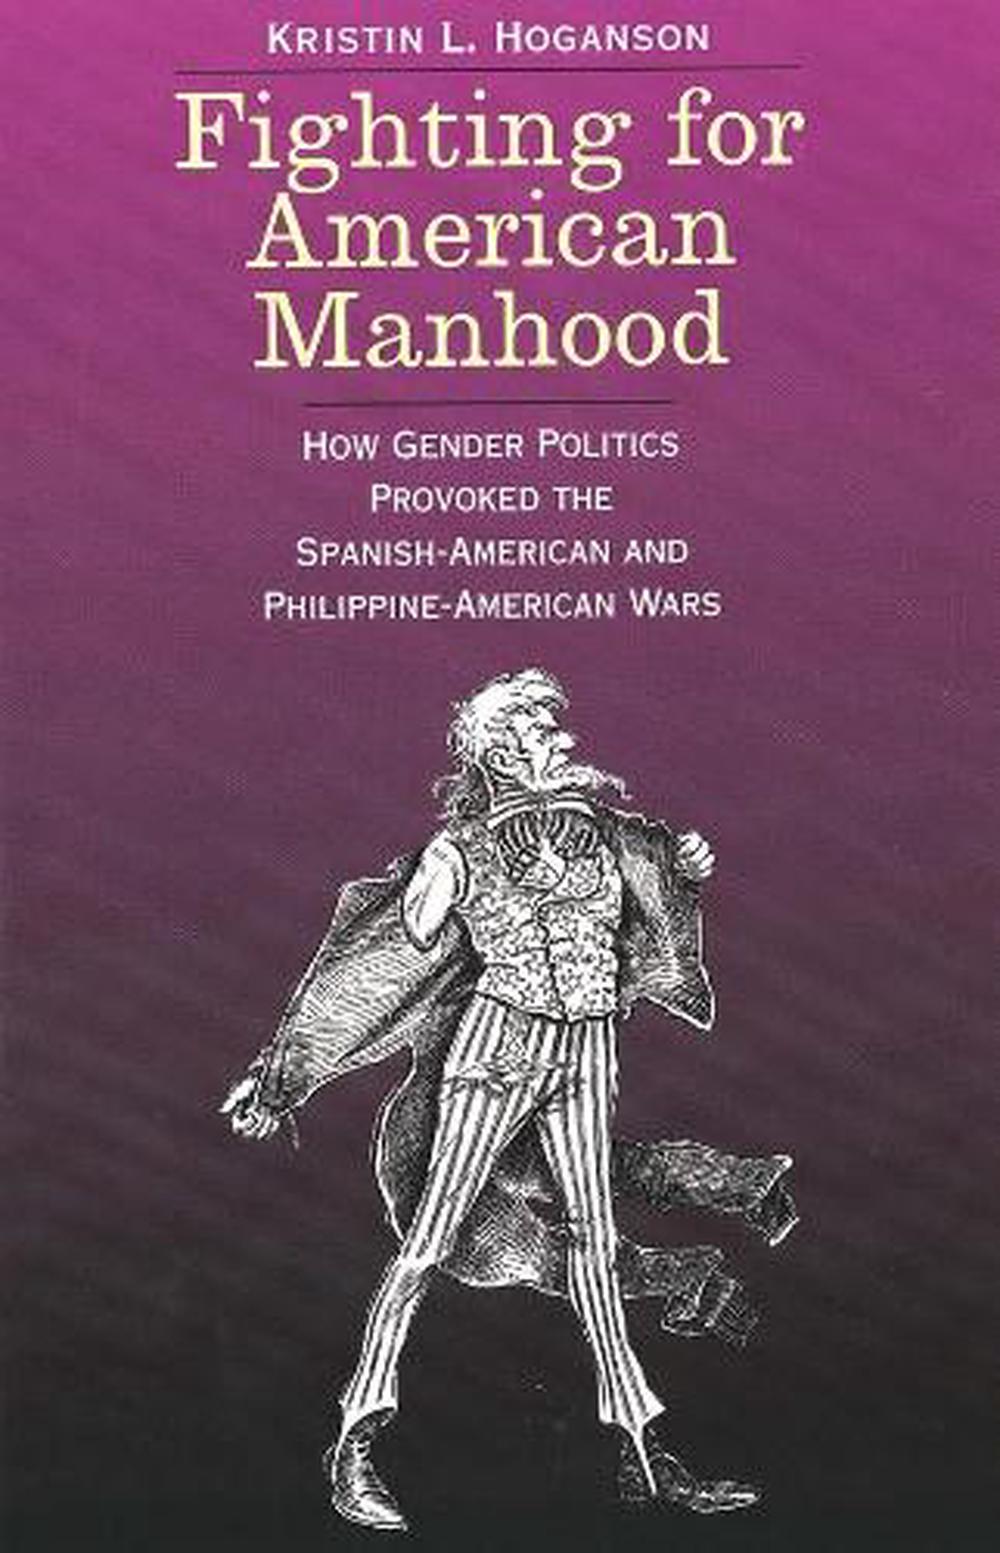 Fighting for American Manhood by Kristin L. Hoganson